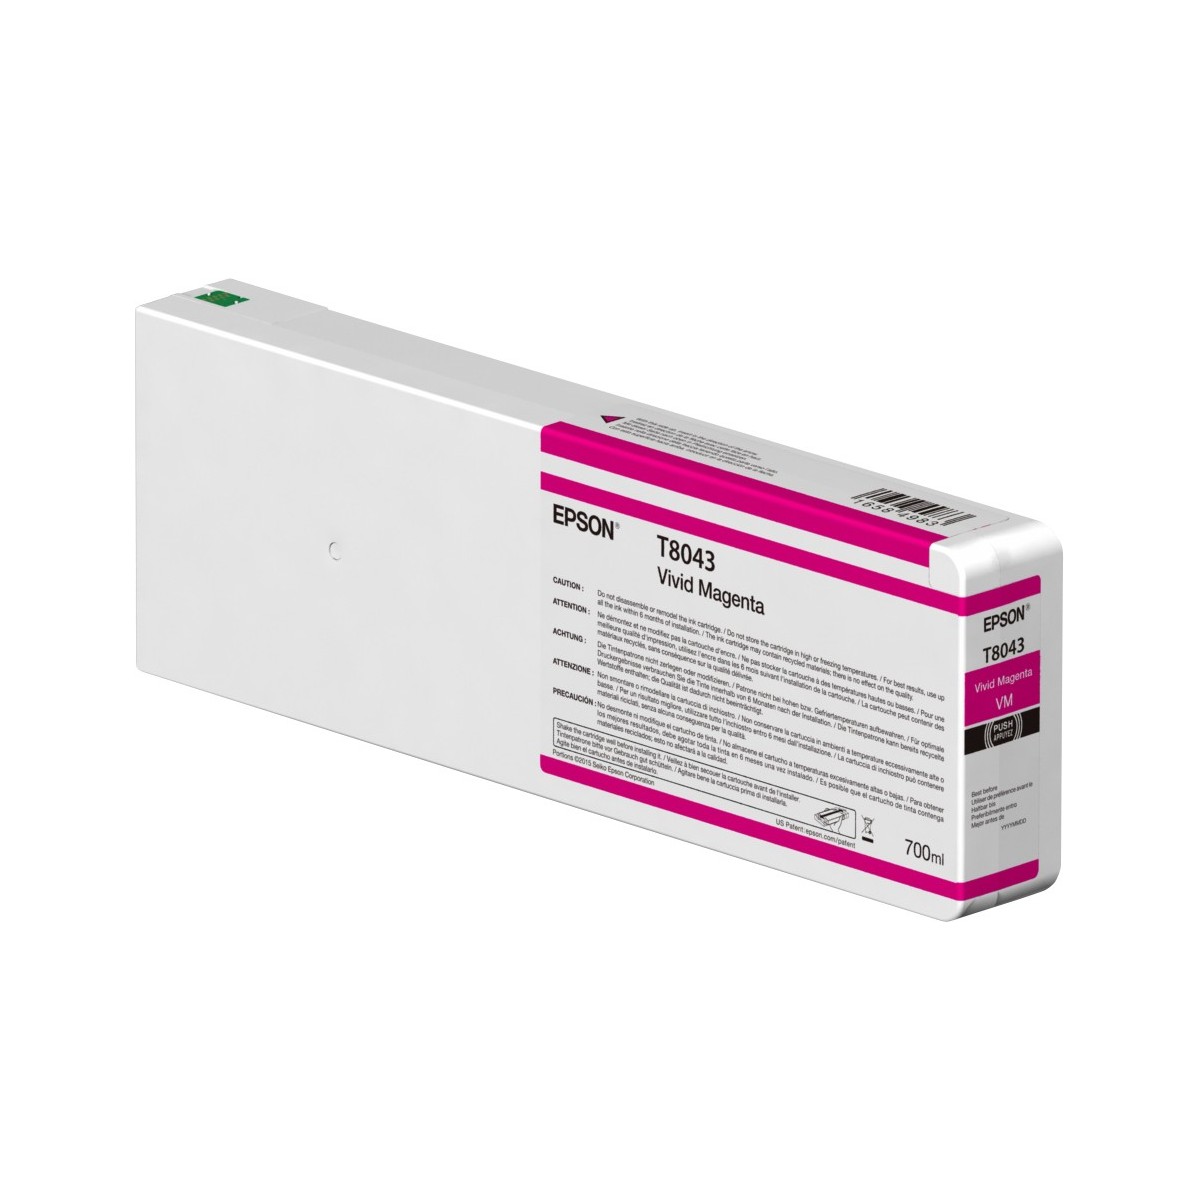 Epson Singlepack Vivid Magenta T804300 UltraChrome HDX/HD 700ml - Pigment-based ink - 700 ml - 1 pc(s)